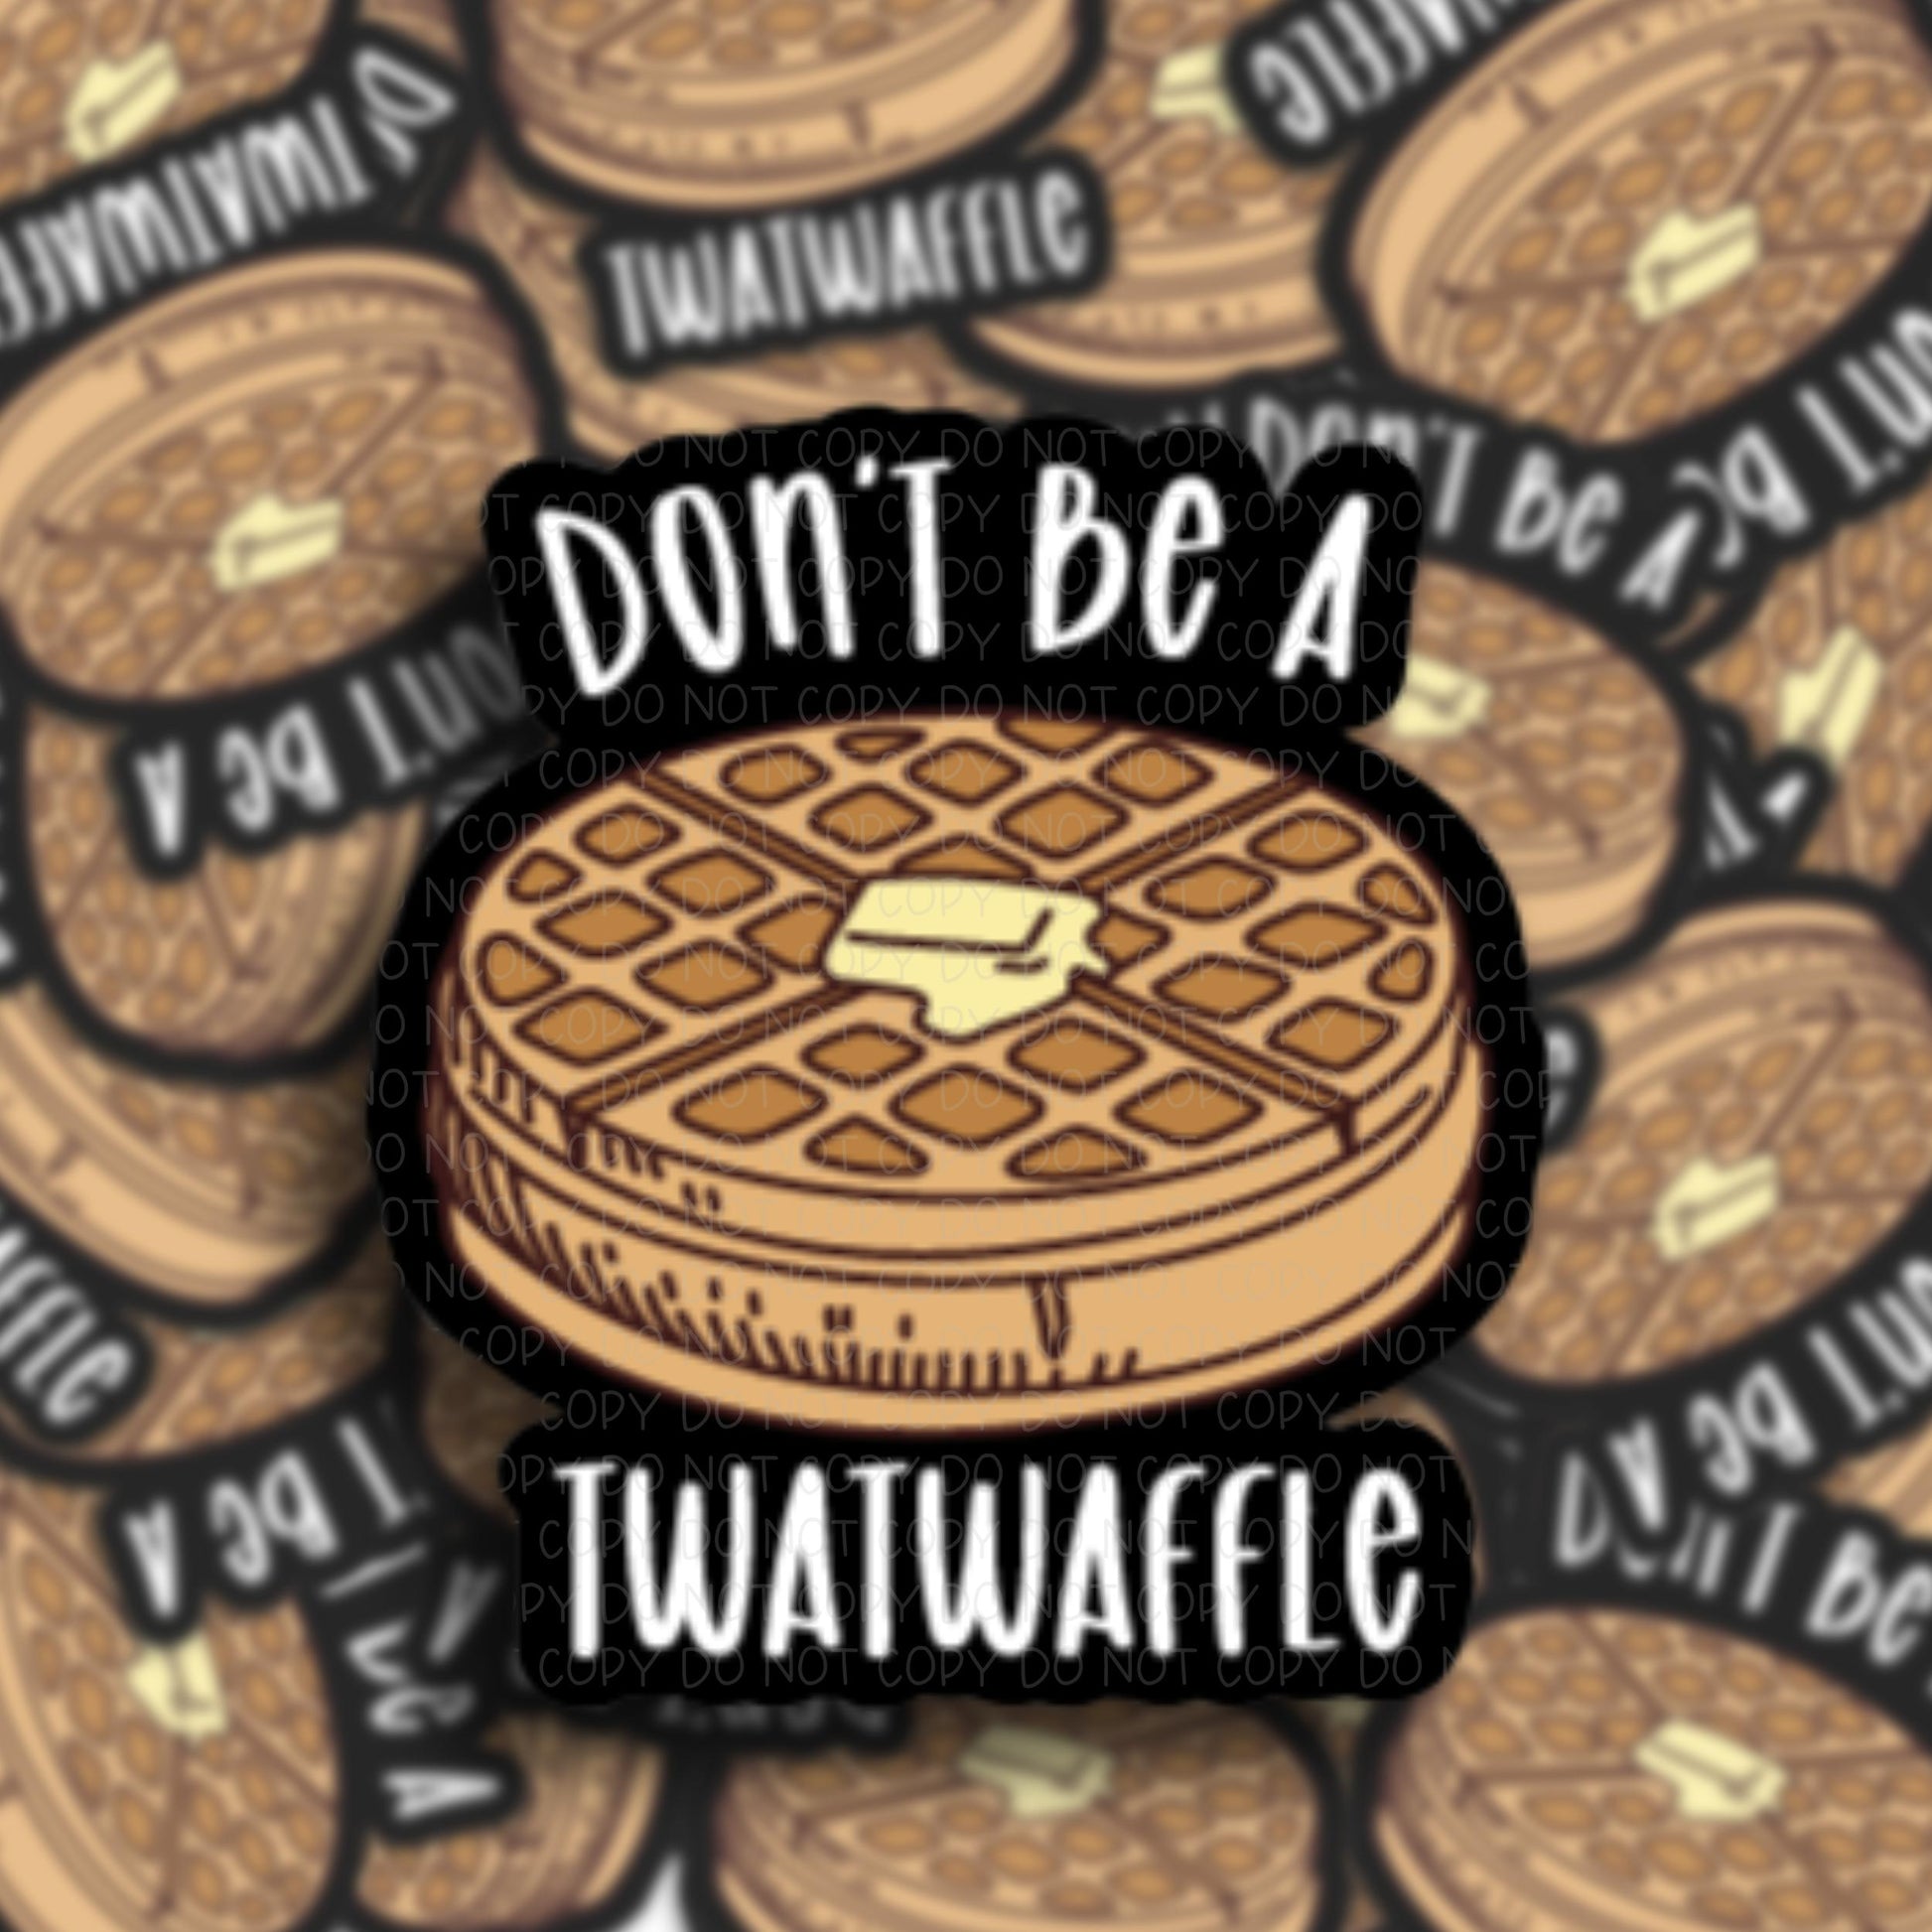 Don't be a Twat Waffle Vinyl Sticker.